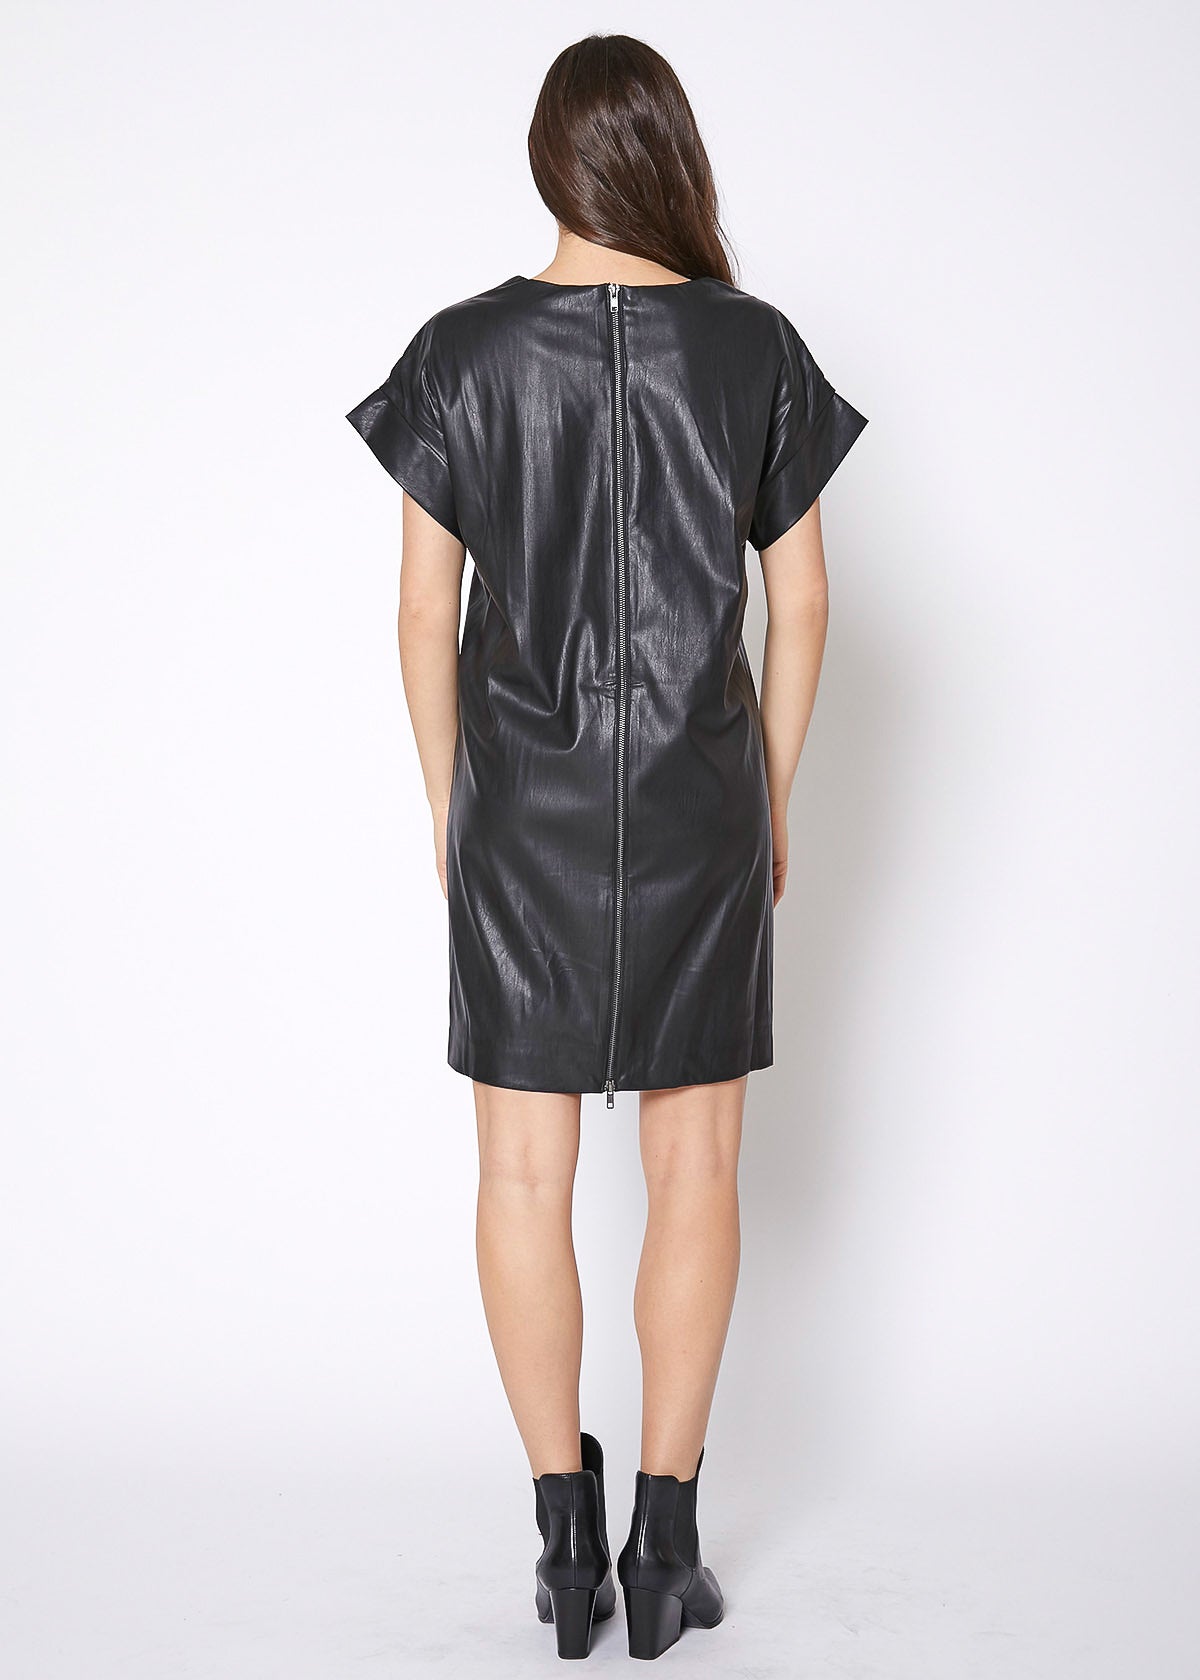 Women's Black PU Leather Dress